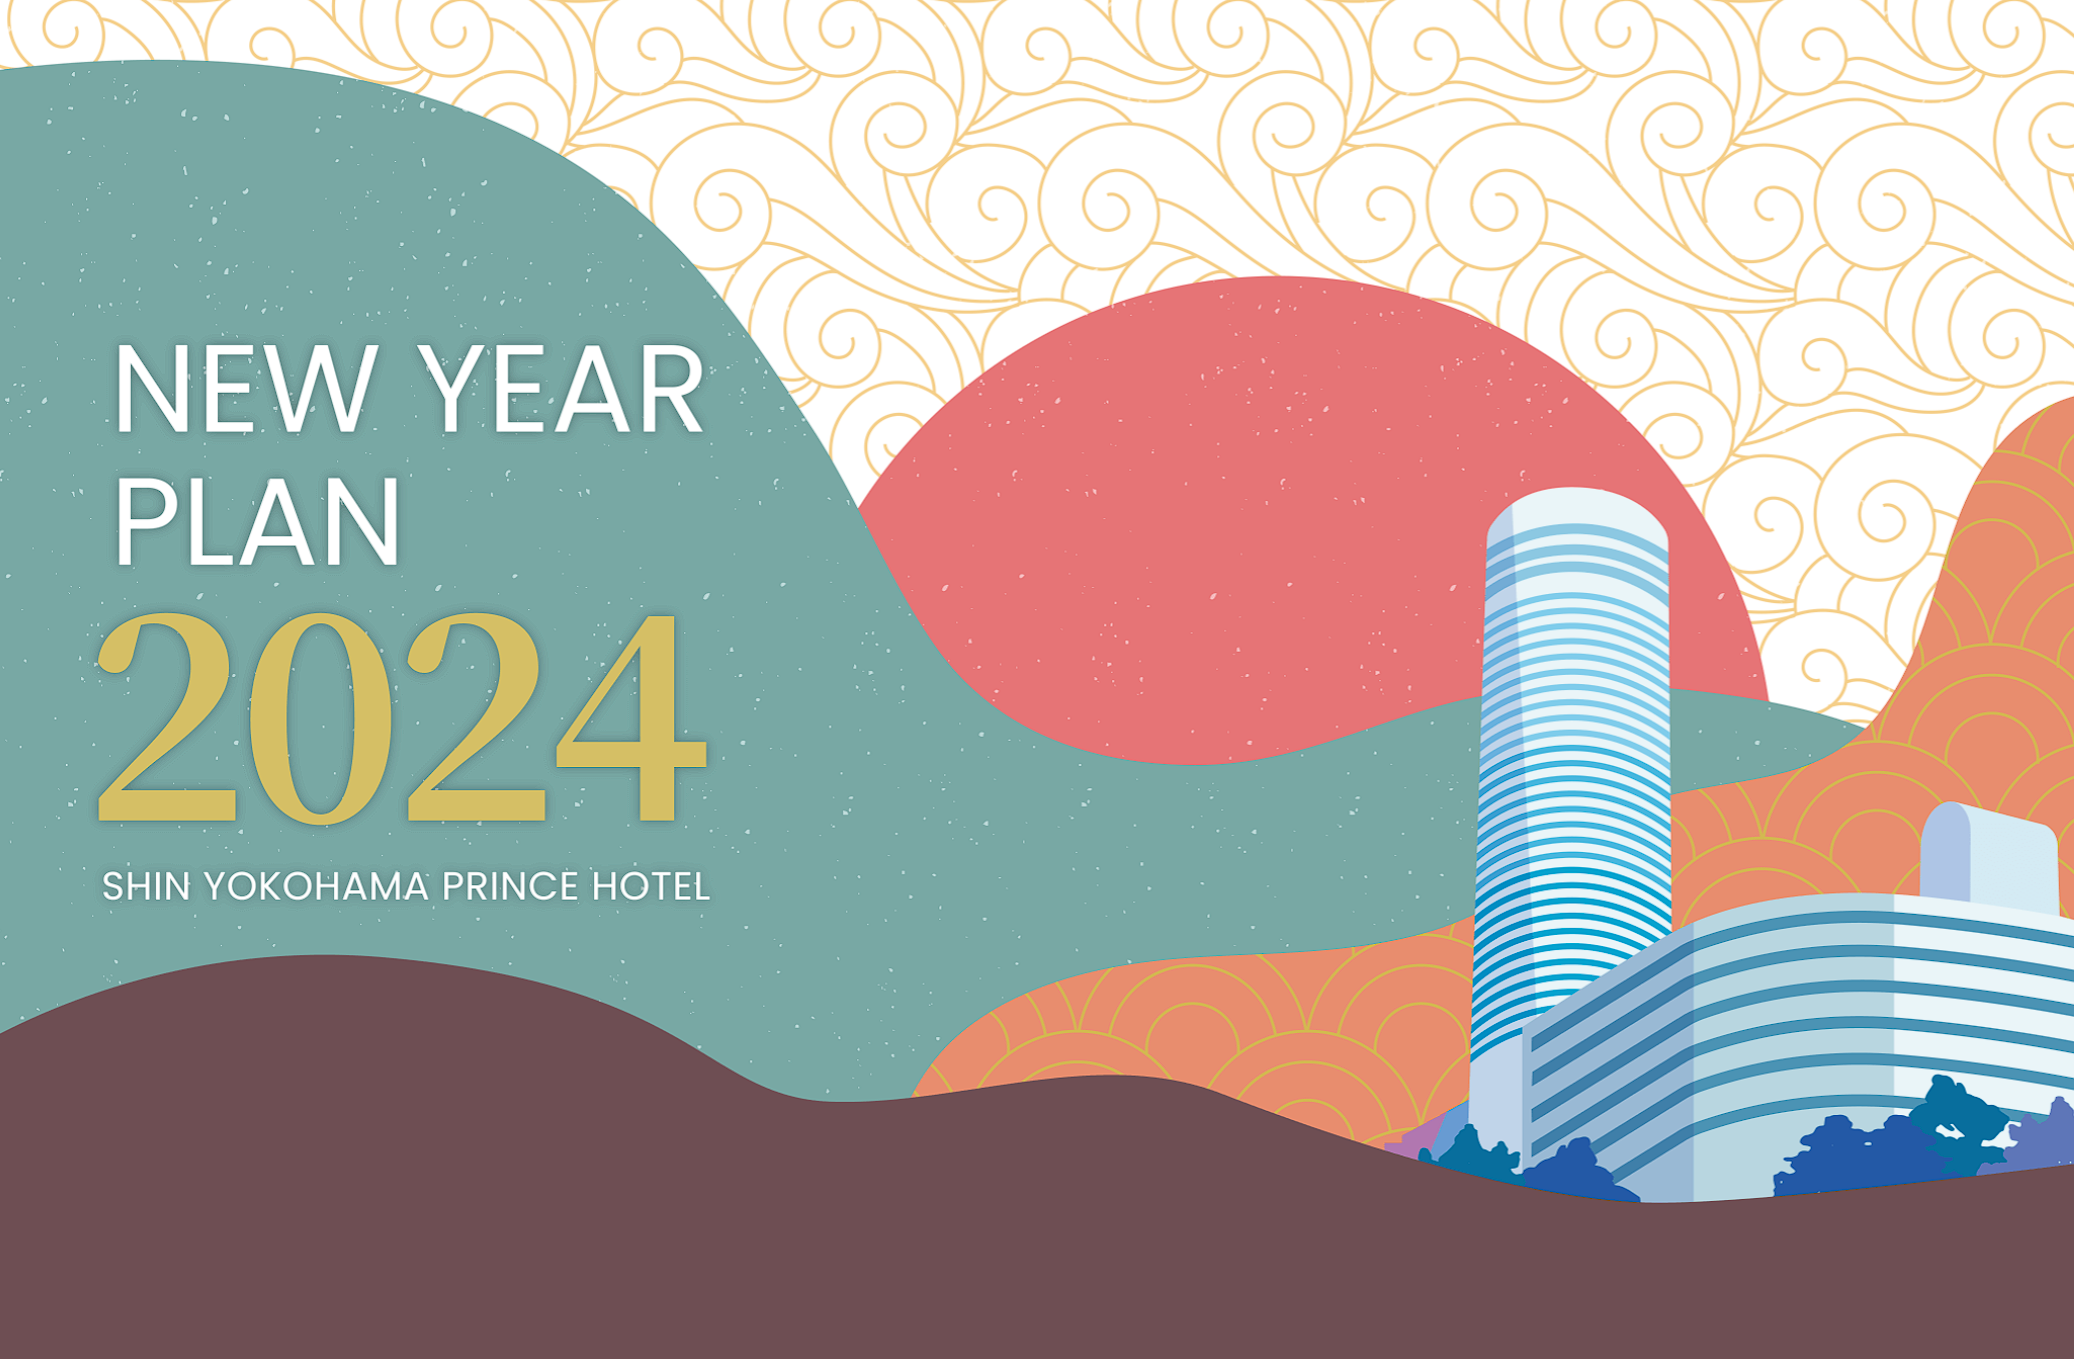 NEW YEAR PLAN 2024 │ 新横浜プリンスホテル